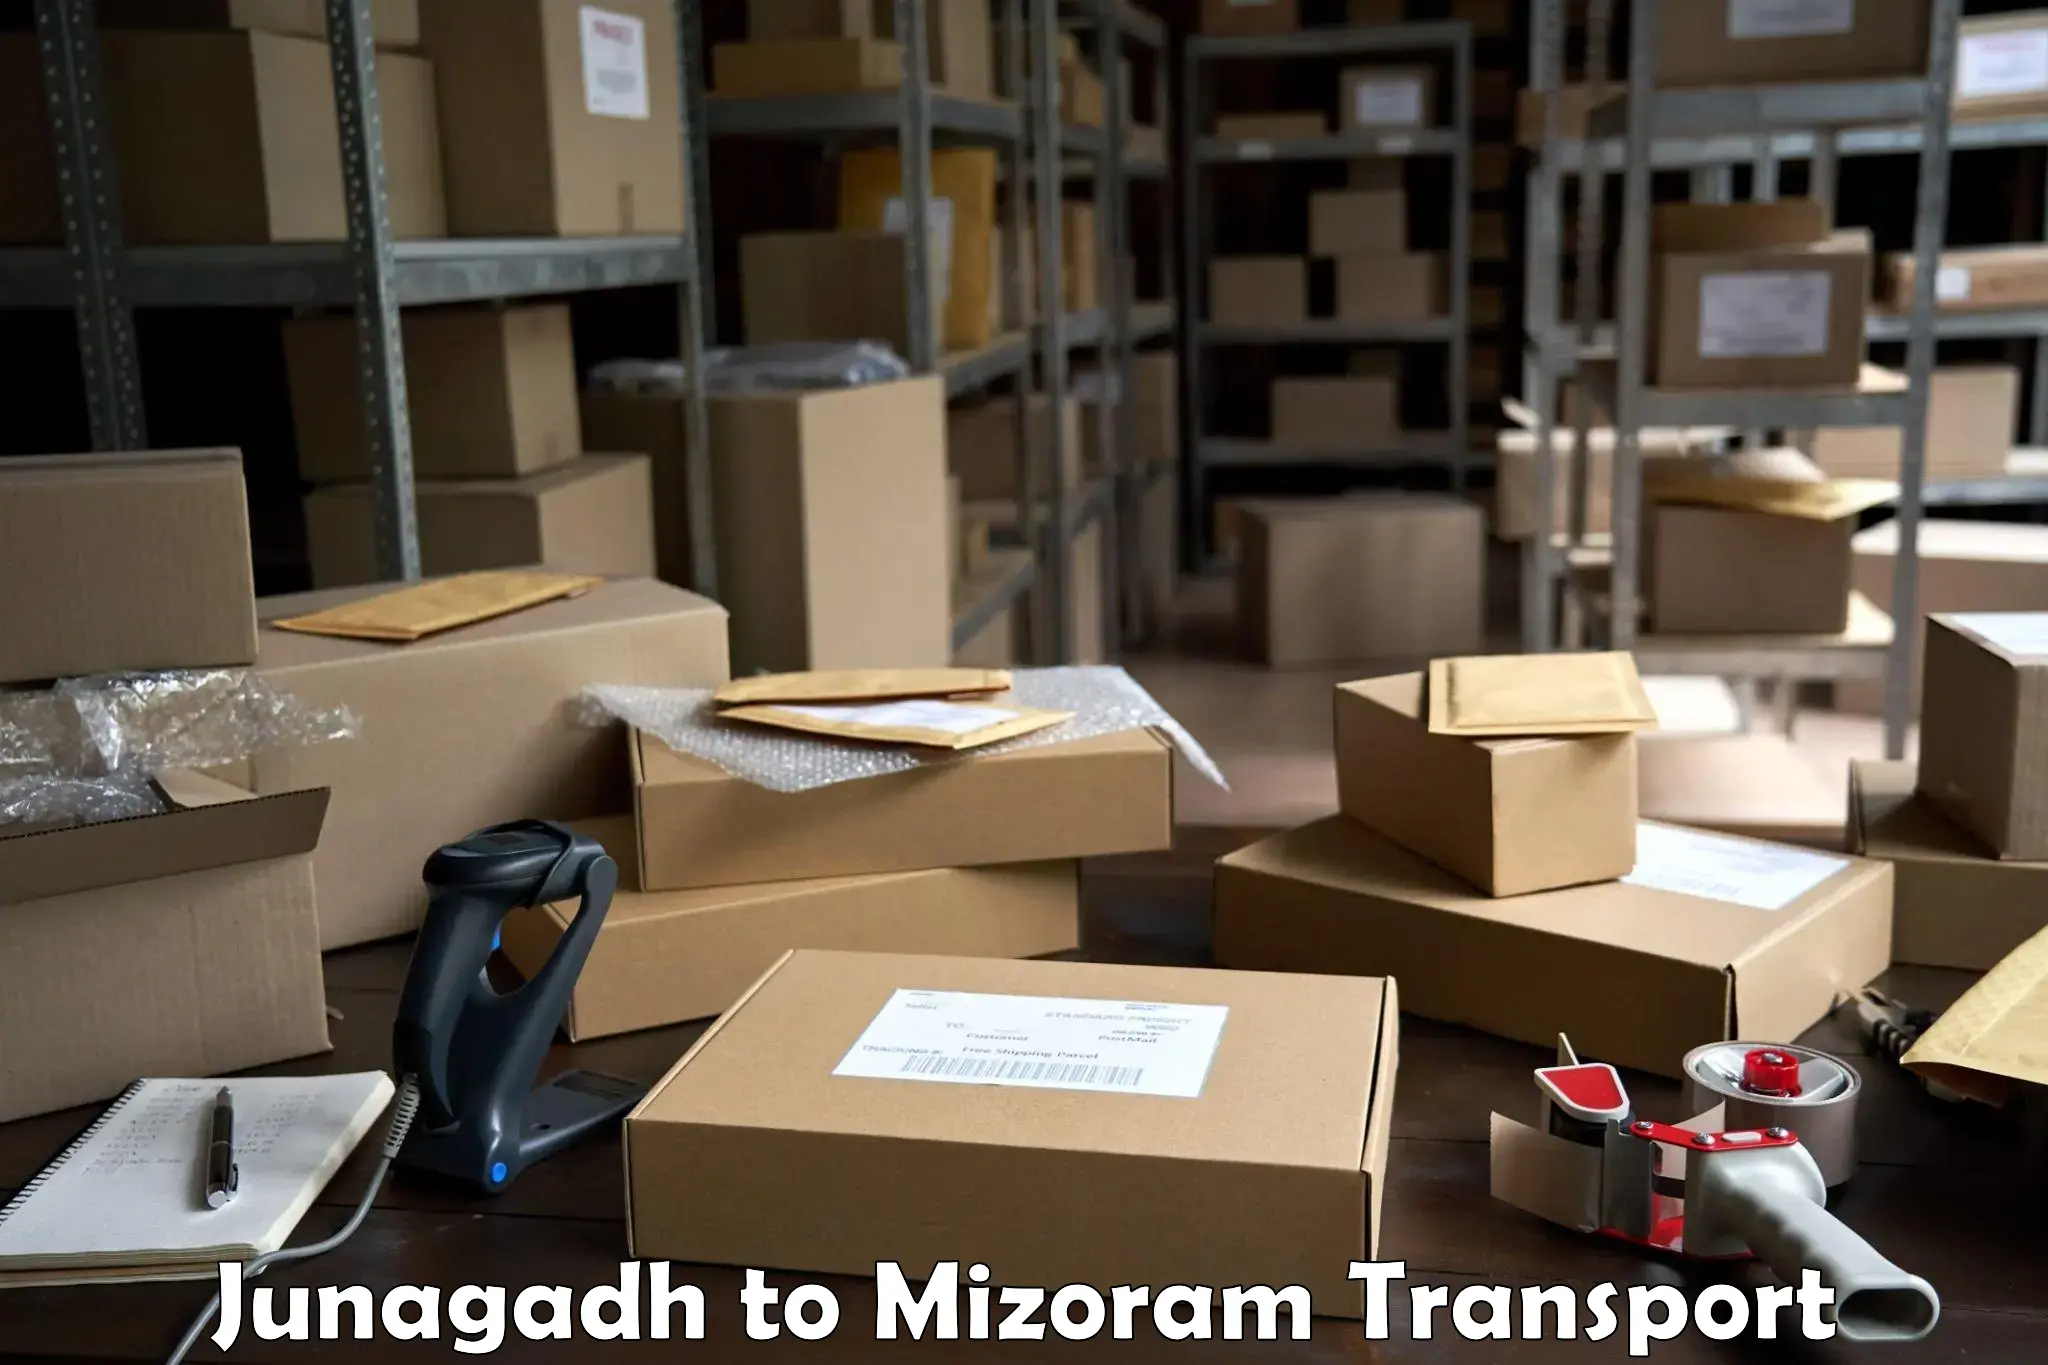 Delivery service Junagadh to Mizoram